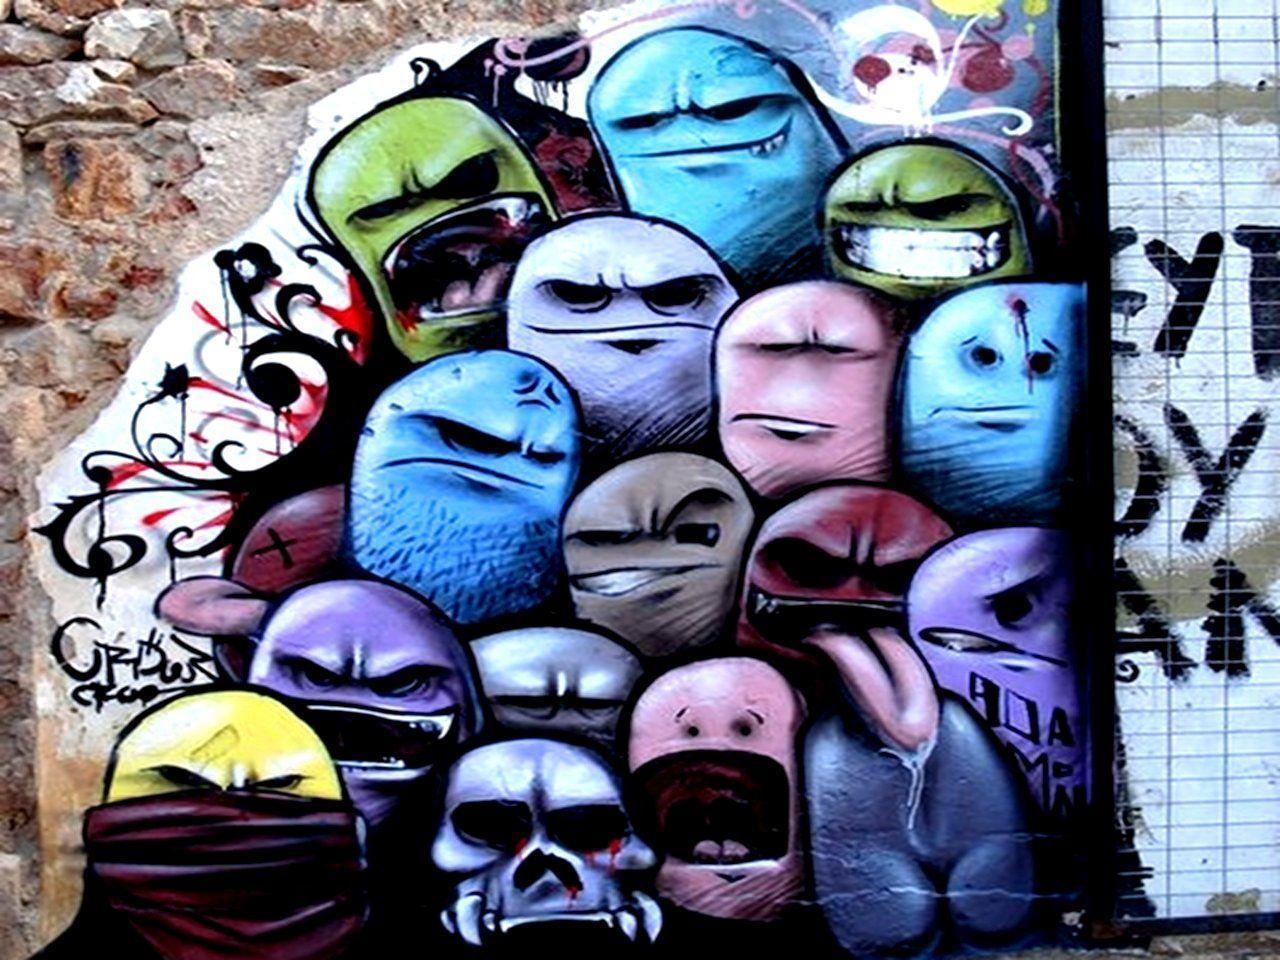 Graffiti Wallpaper HD | PixelsTalk.Net